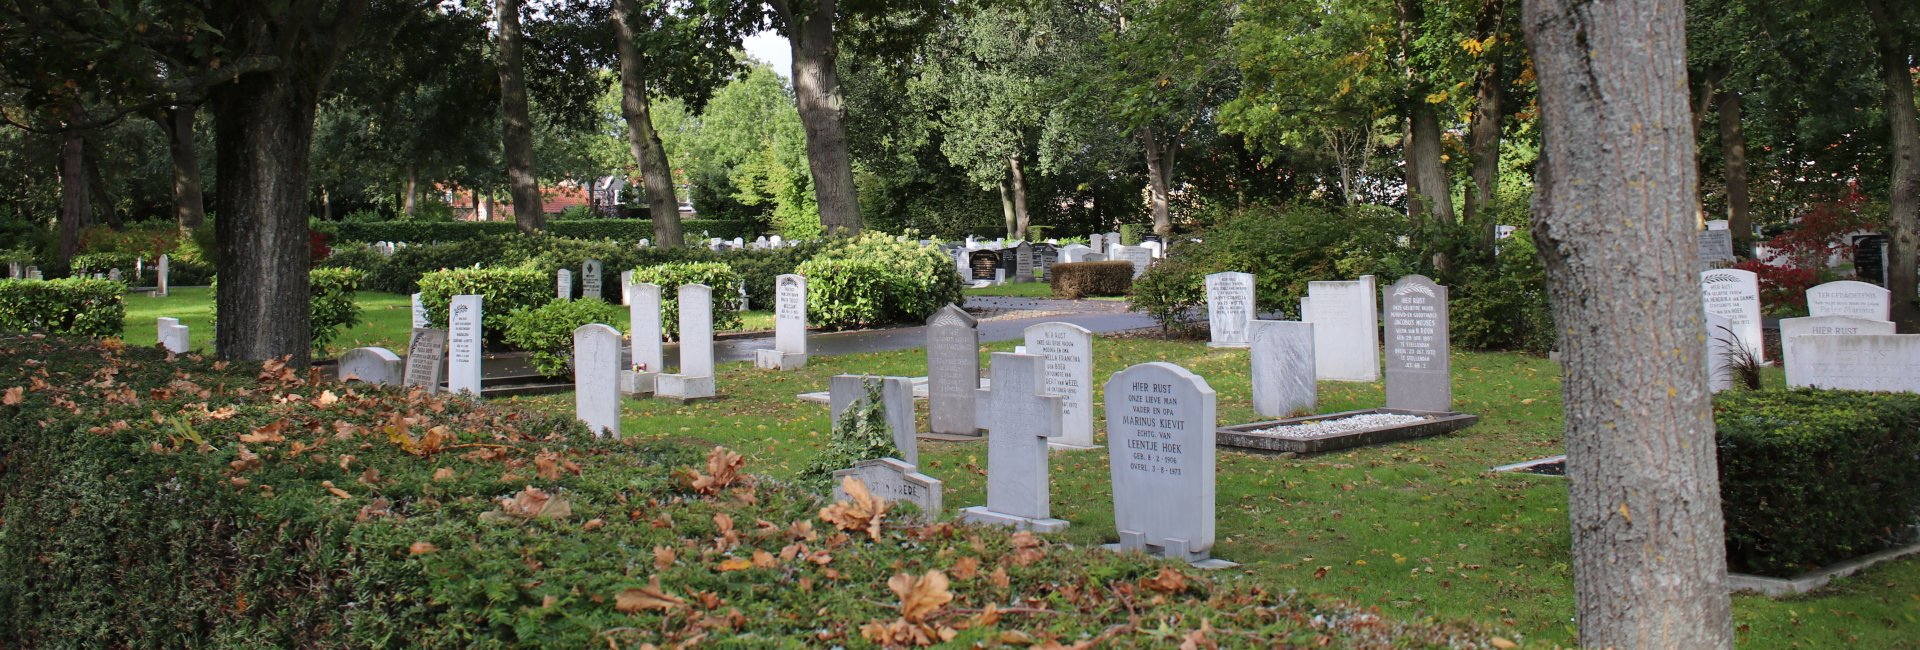 algemene begraafplaats in Stellendam